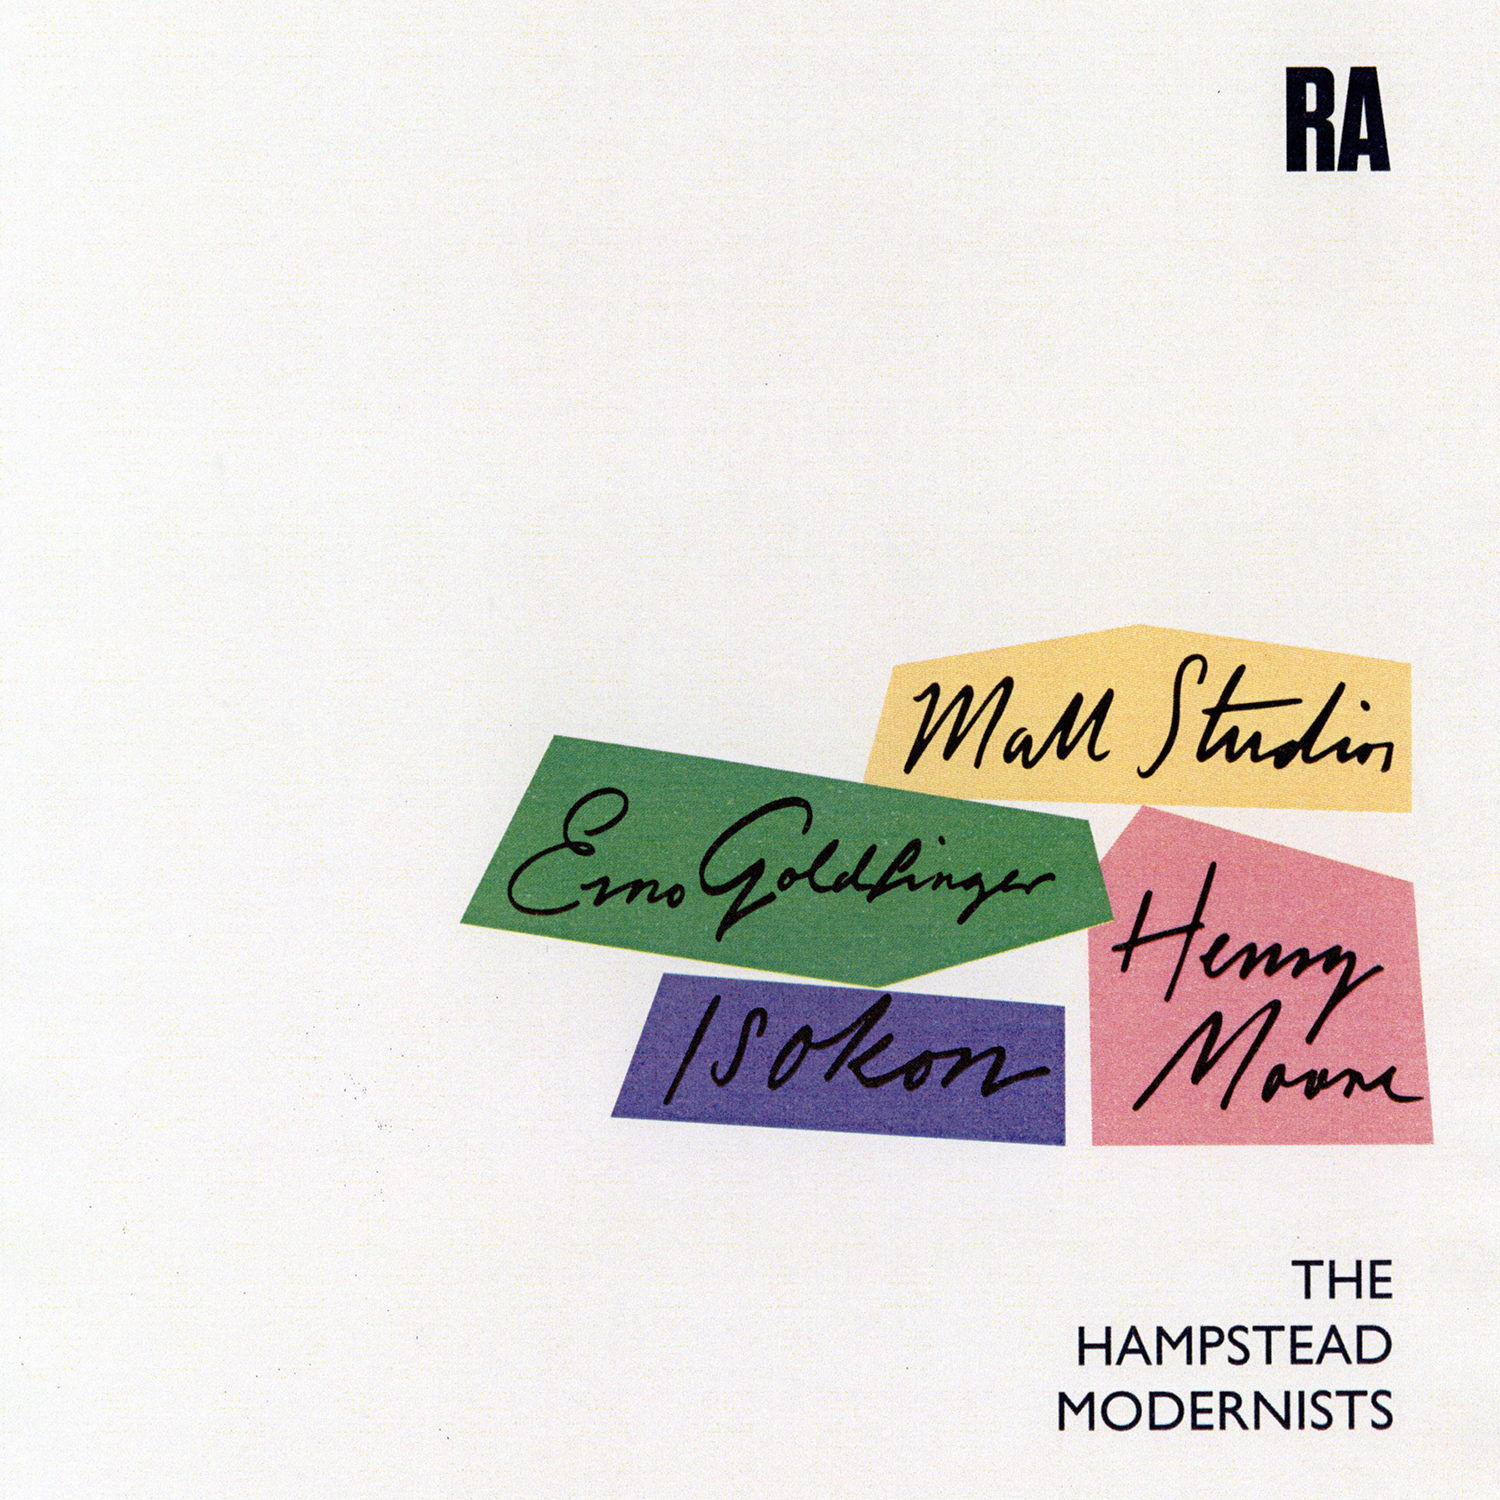 Royal Academy – Hampstead Modernist Map RA